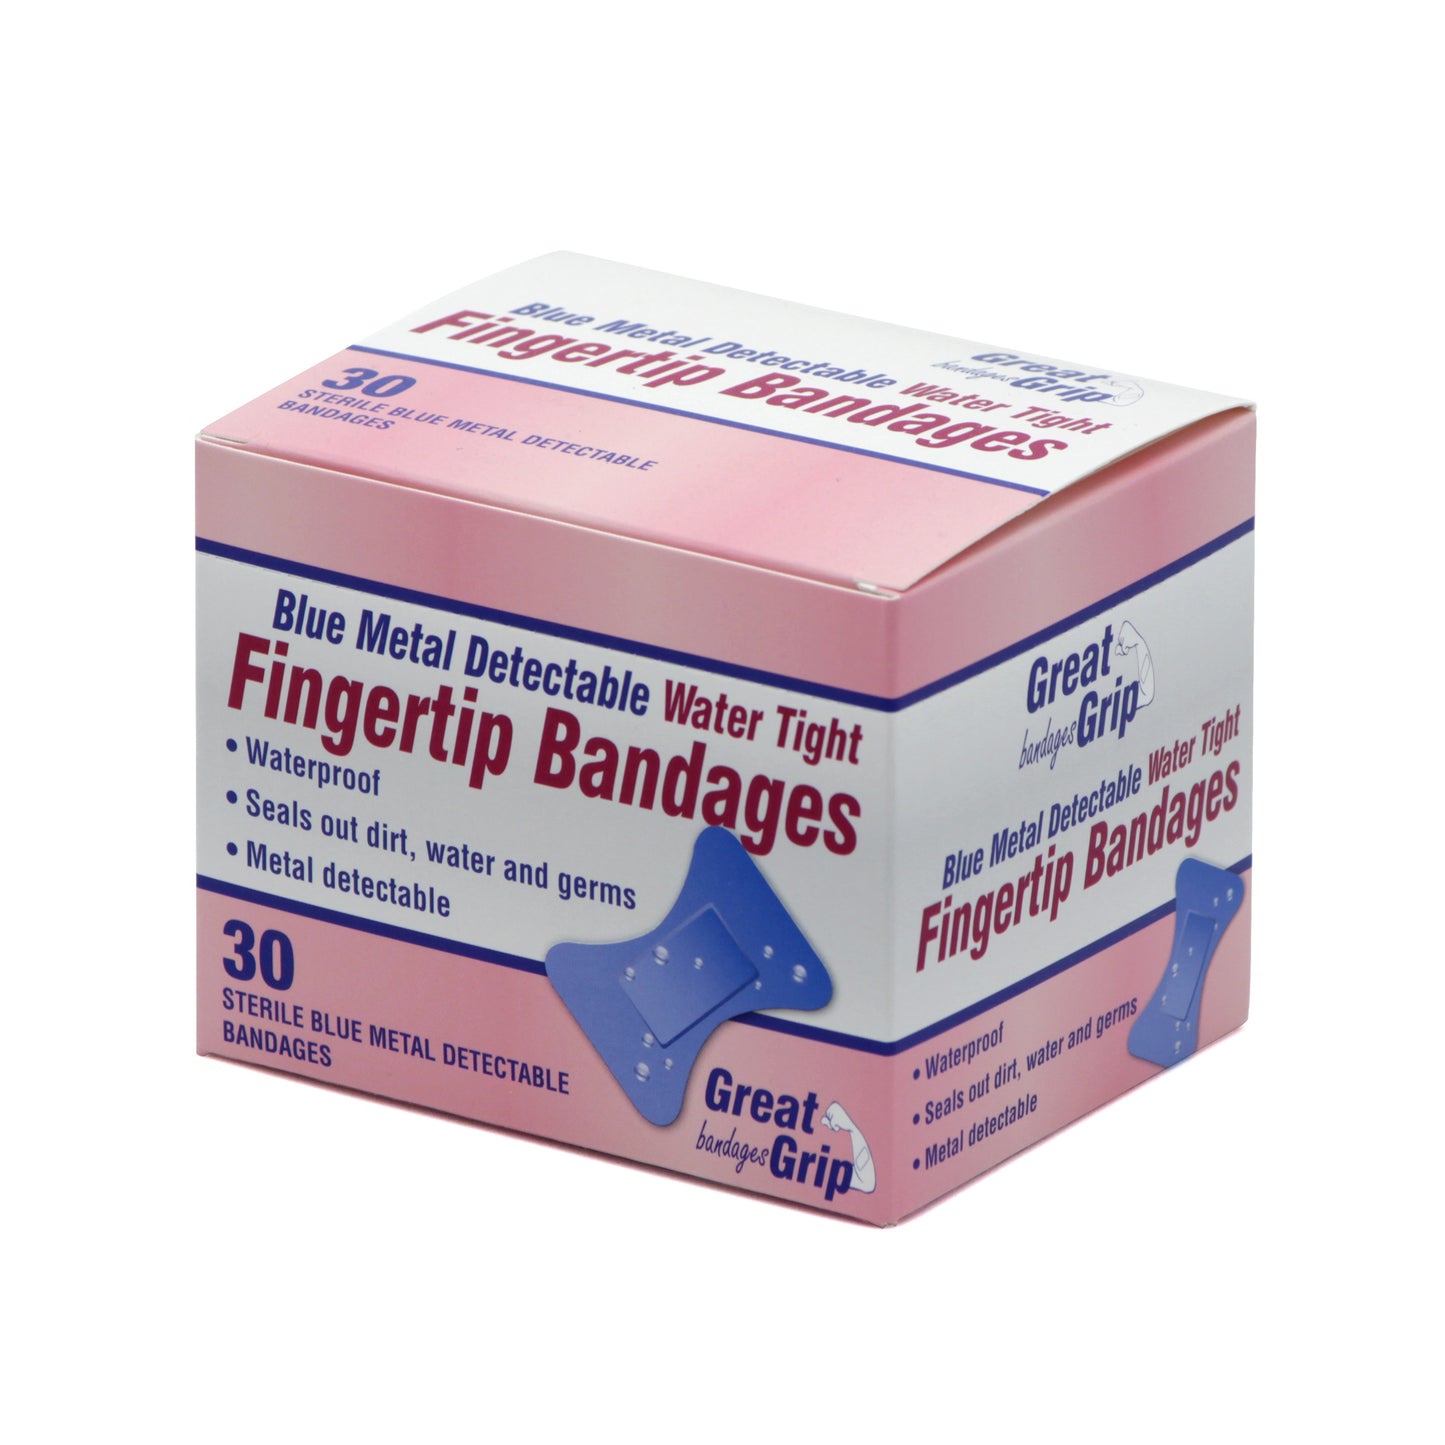 Blue Metal Detectable Water Tight Bandages Fingertip